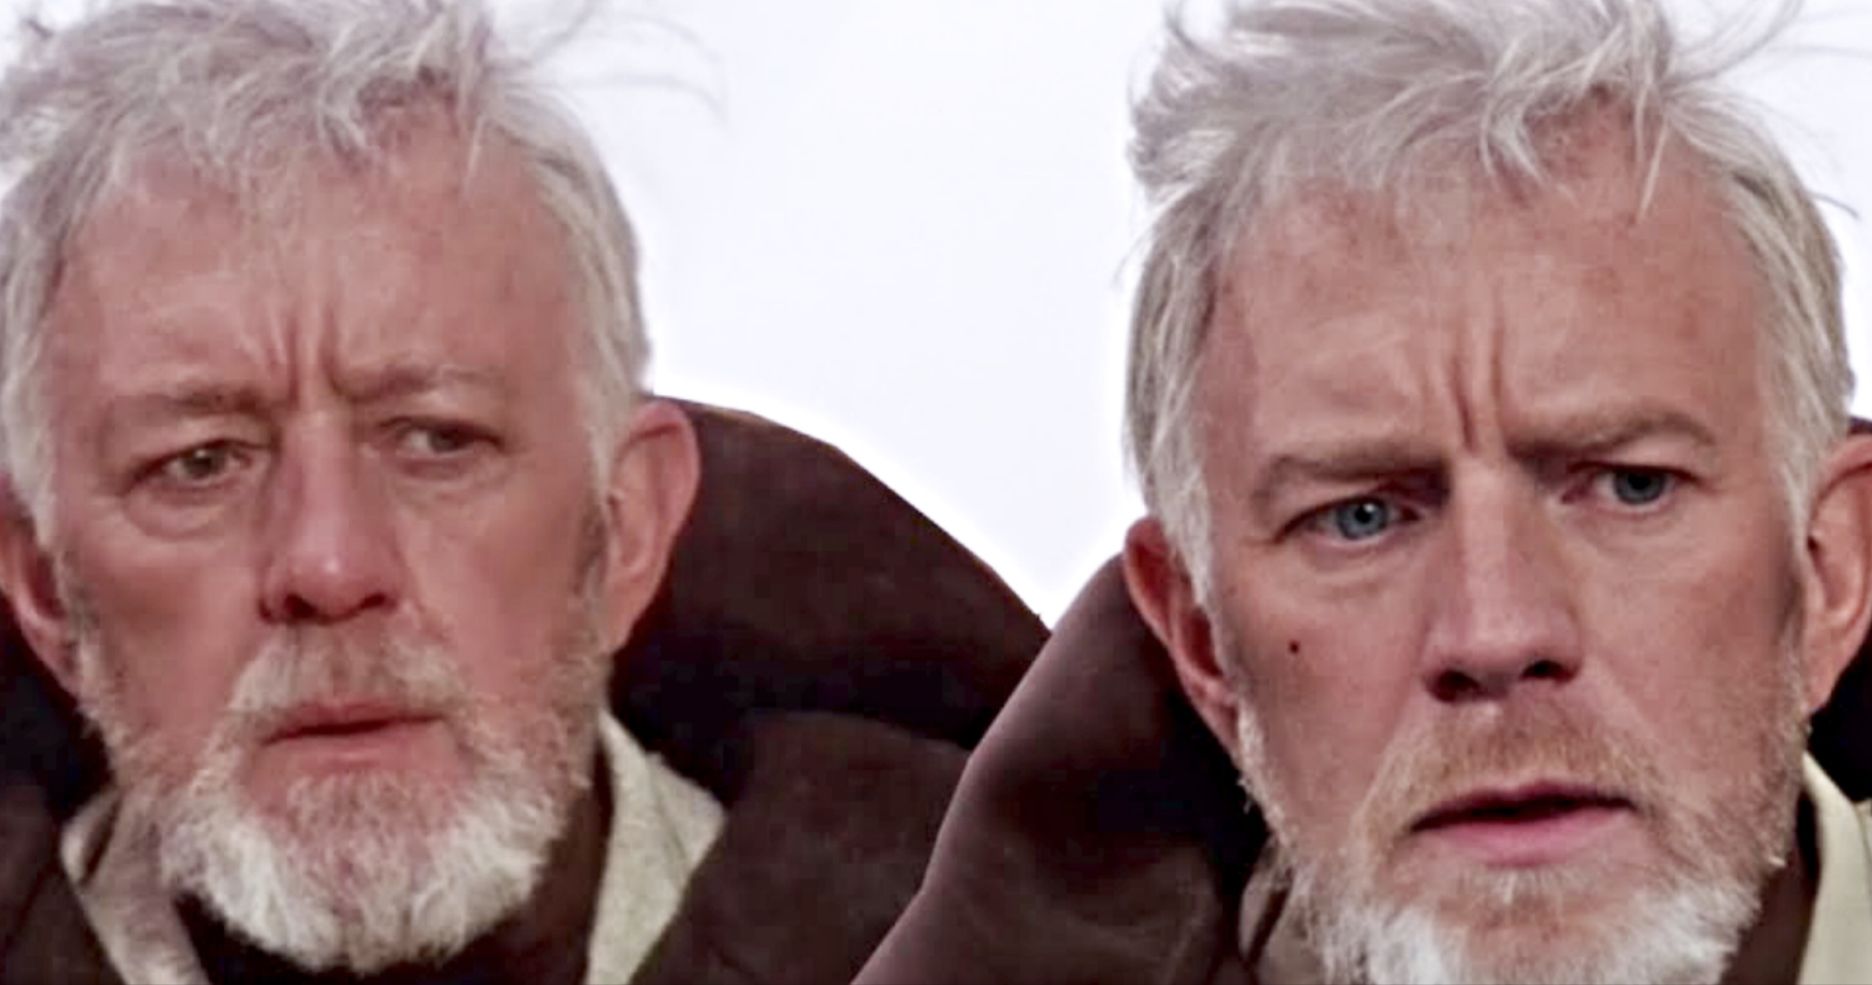 A New Hope DeepFake Video Stars Ewan McGregor as Obi-Wan Kenobi